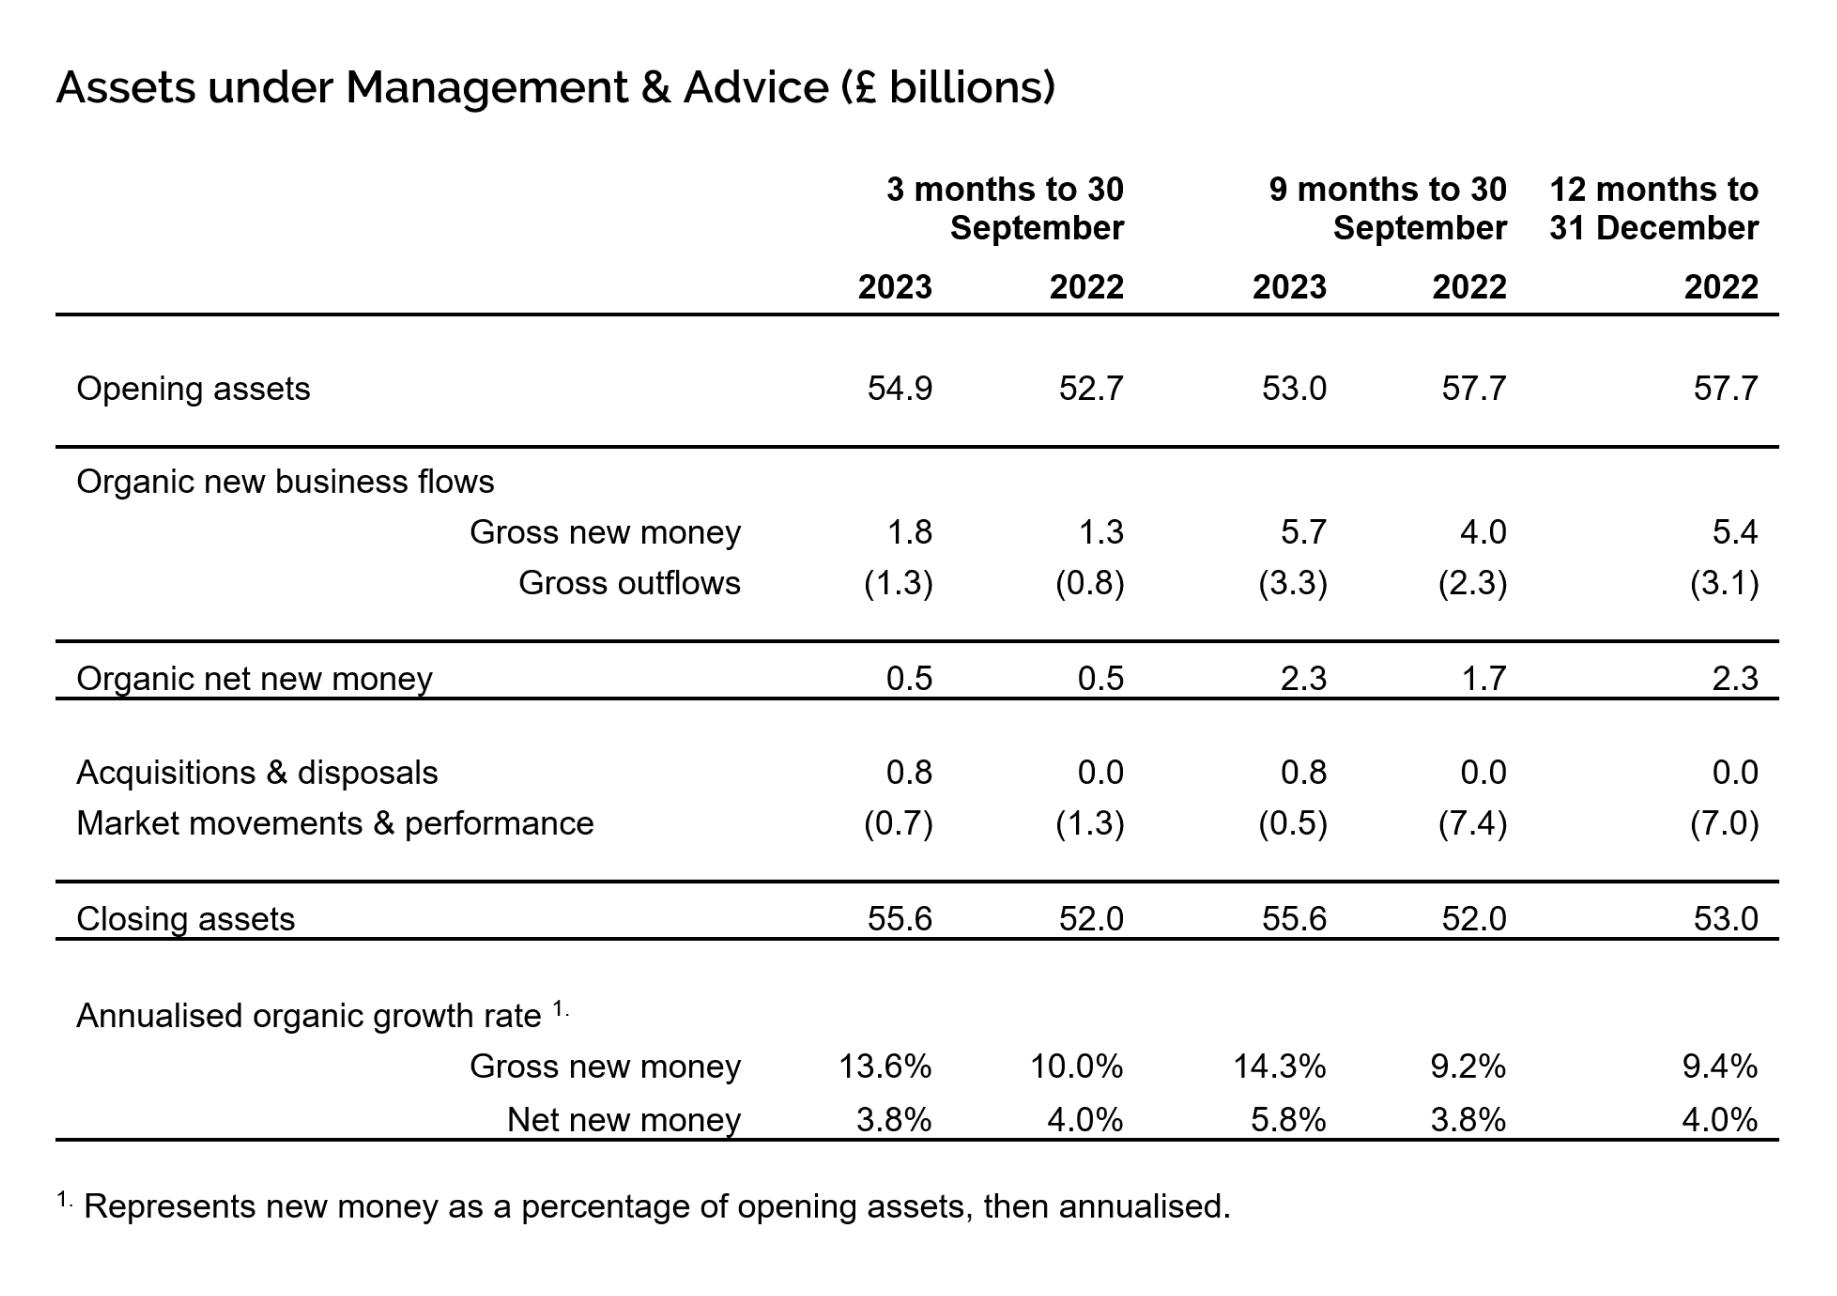 Assets under Management & Advice (£bn) as at 30 September 2023